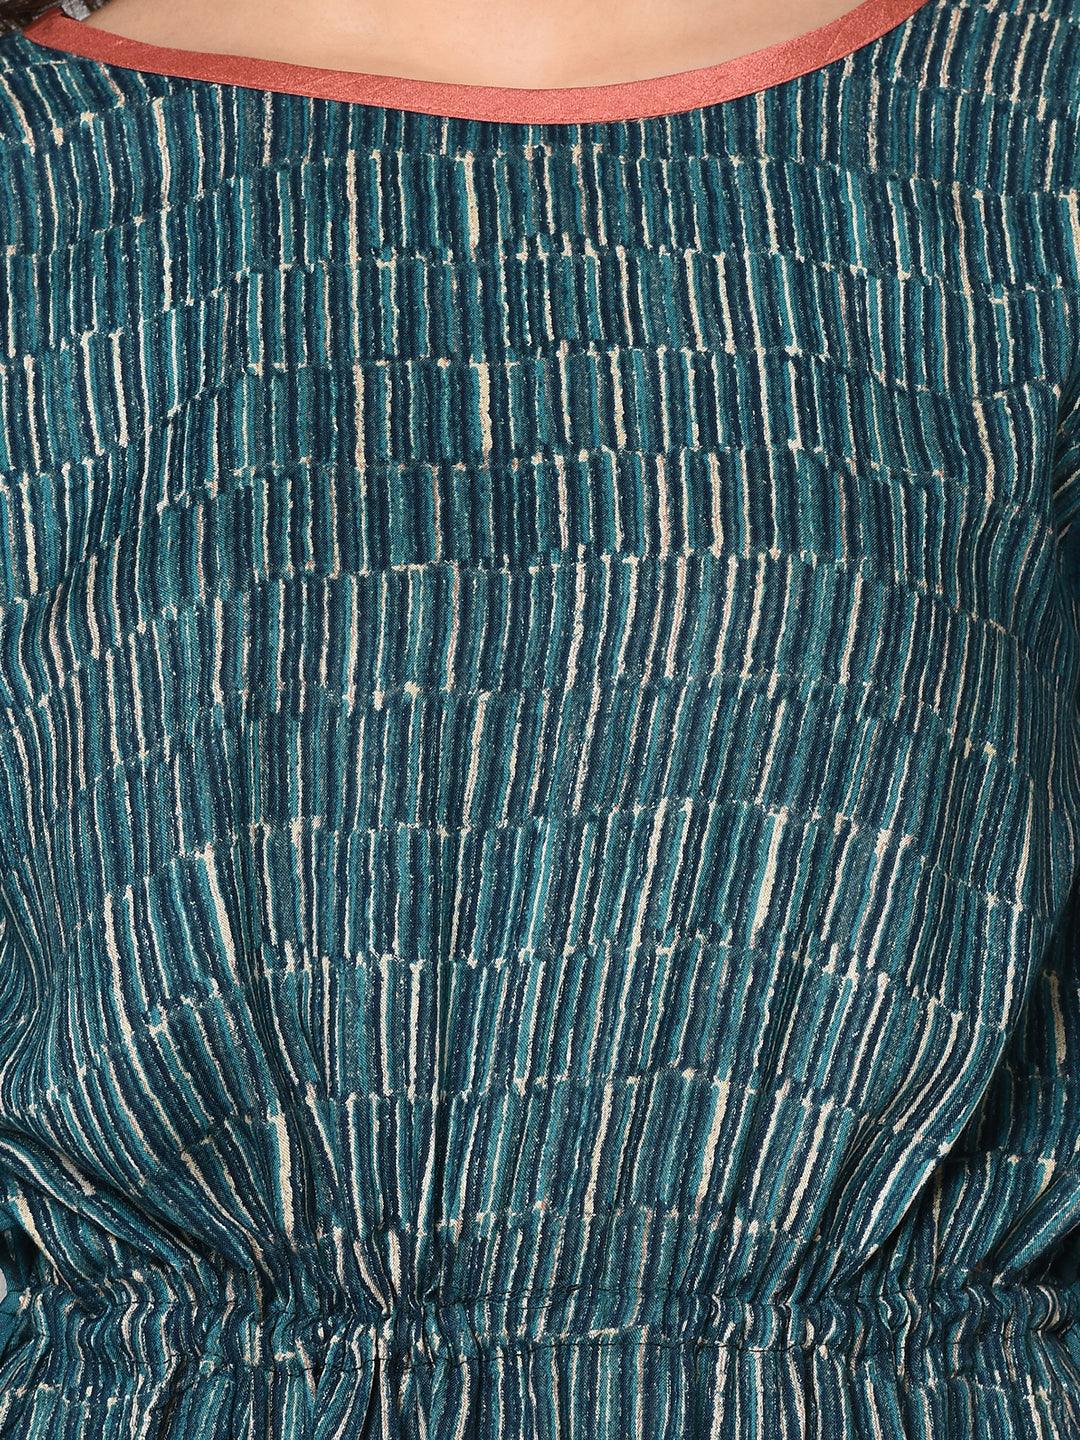 Royal Green designer Anarkali Dress (Fully Stitched) - Znxclothing